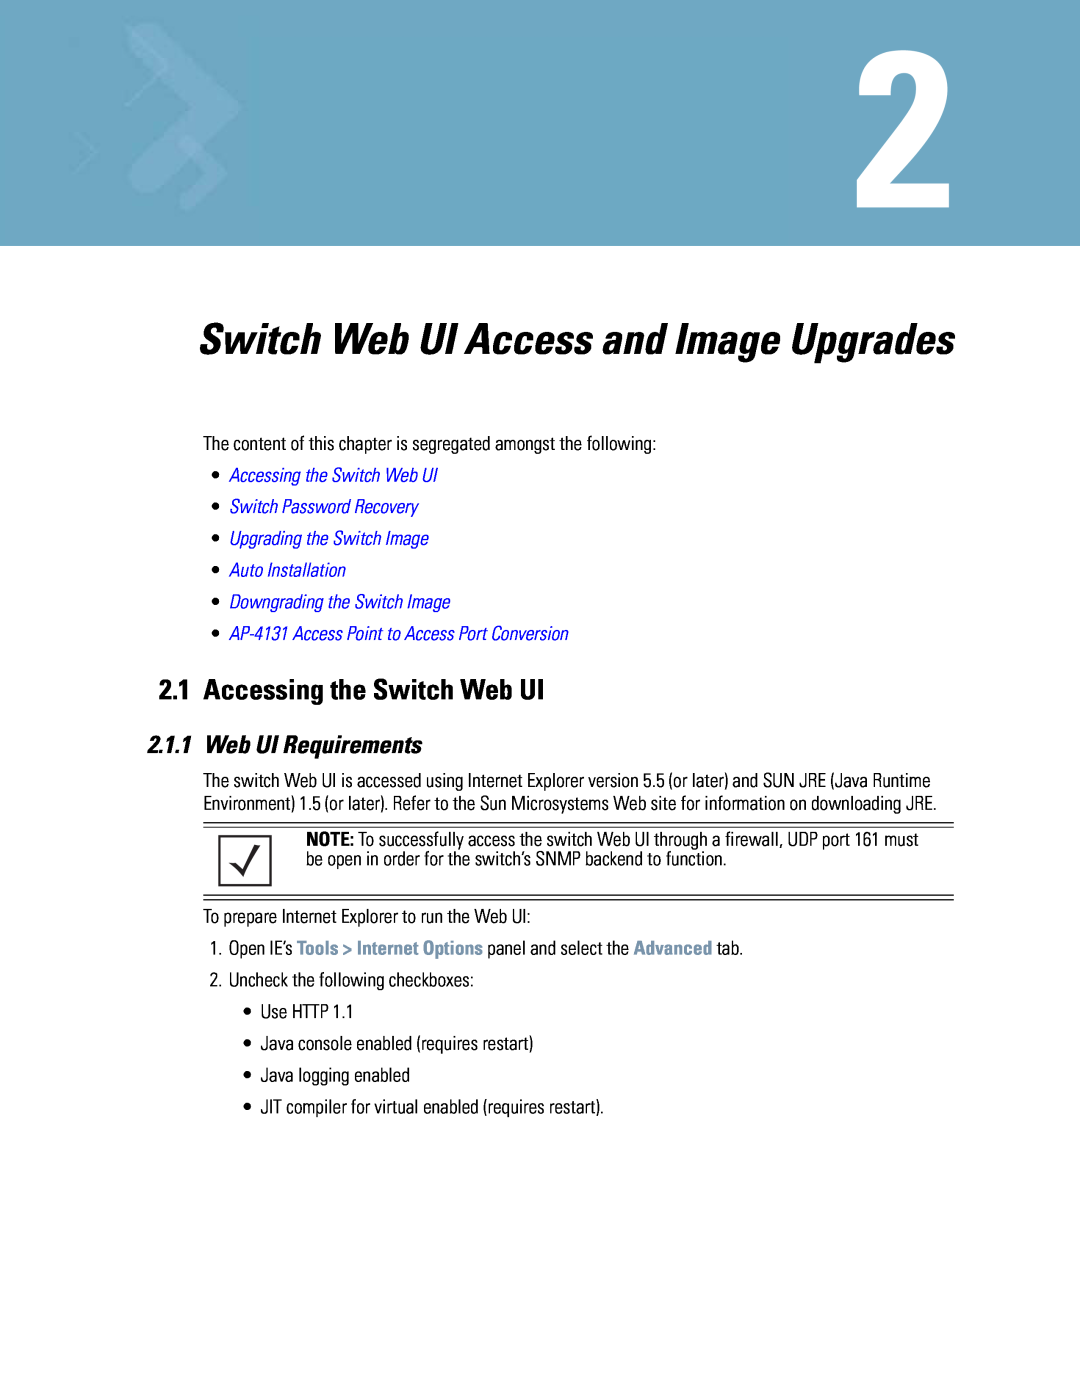 Motorola WS5100 manual 2.1Accessing the Switch Web UI, Web UI Requirements, •Accessing the Switch Web UI 